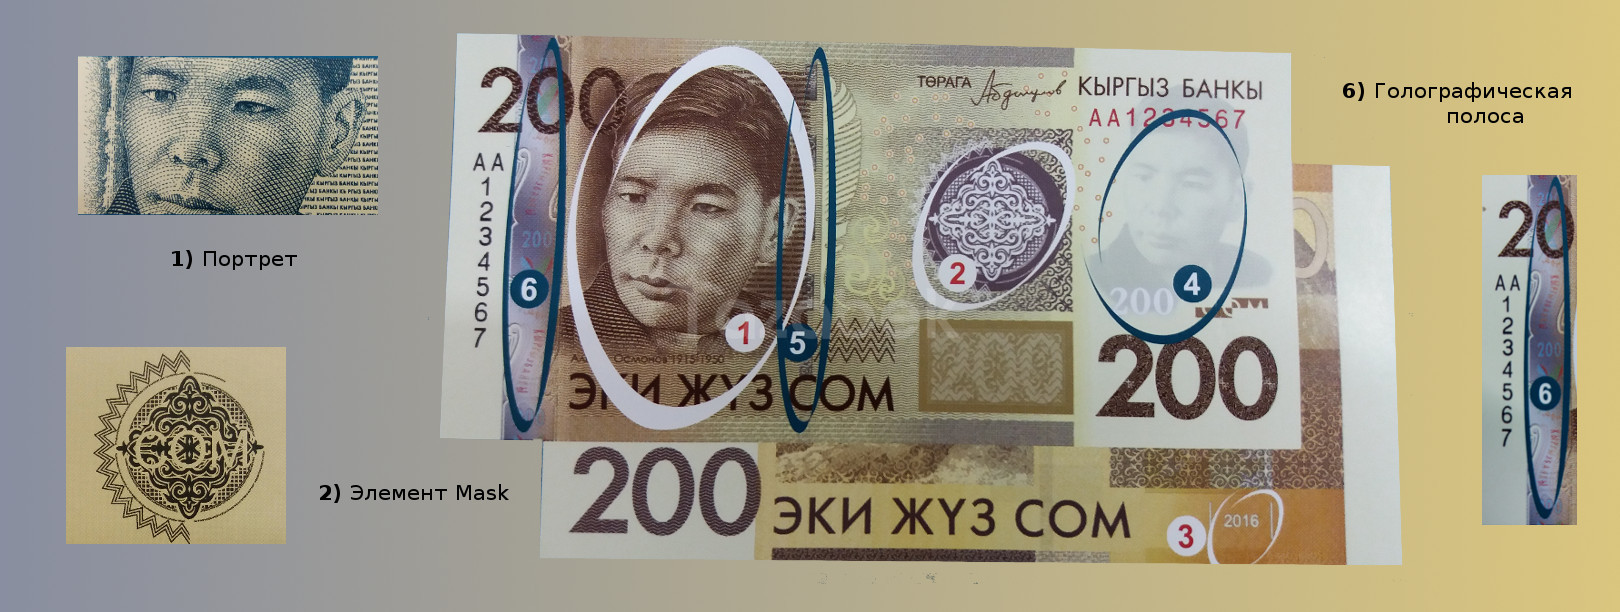 Валюта Кыргызстана - банкнота номиналом 200 сомов образца 2017 года. АКИpress